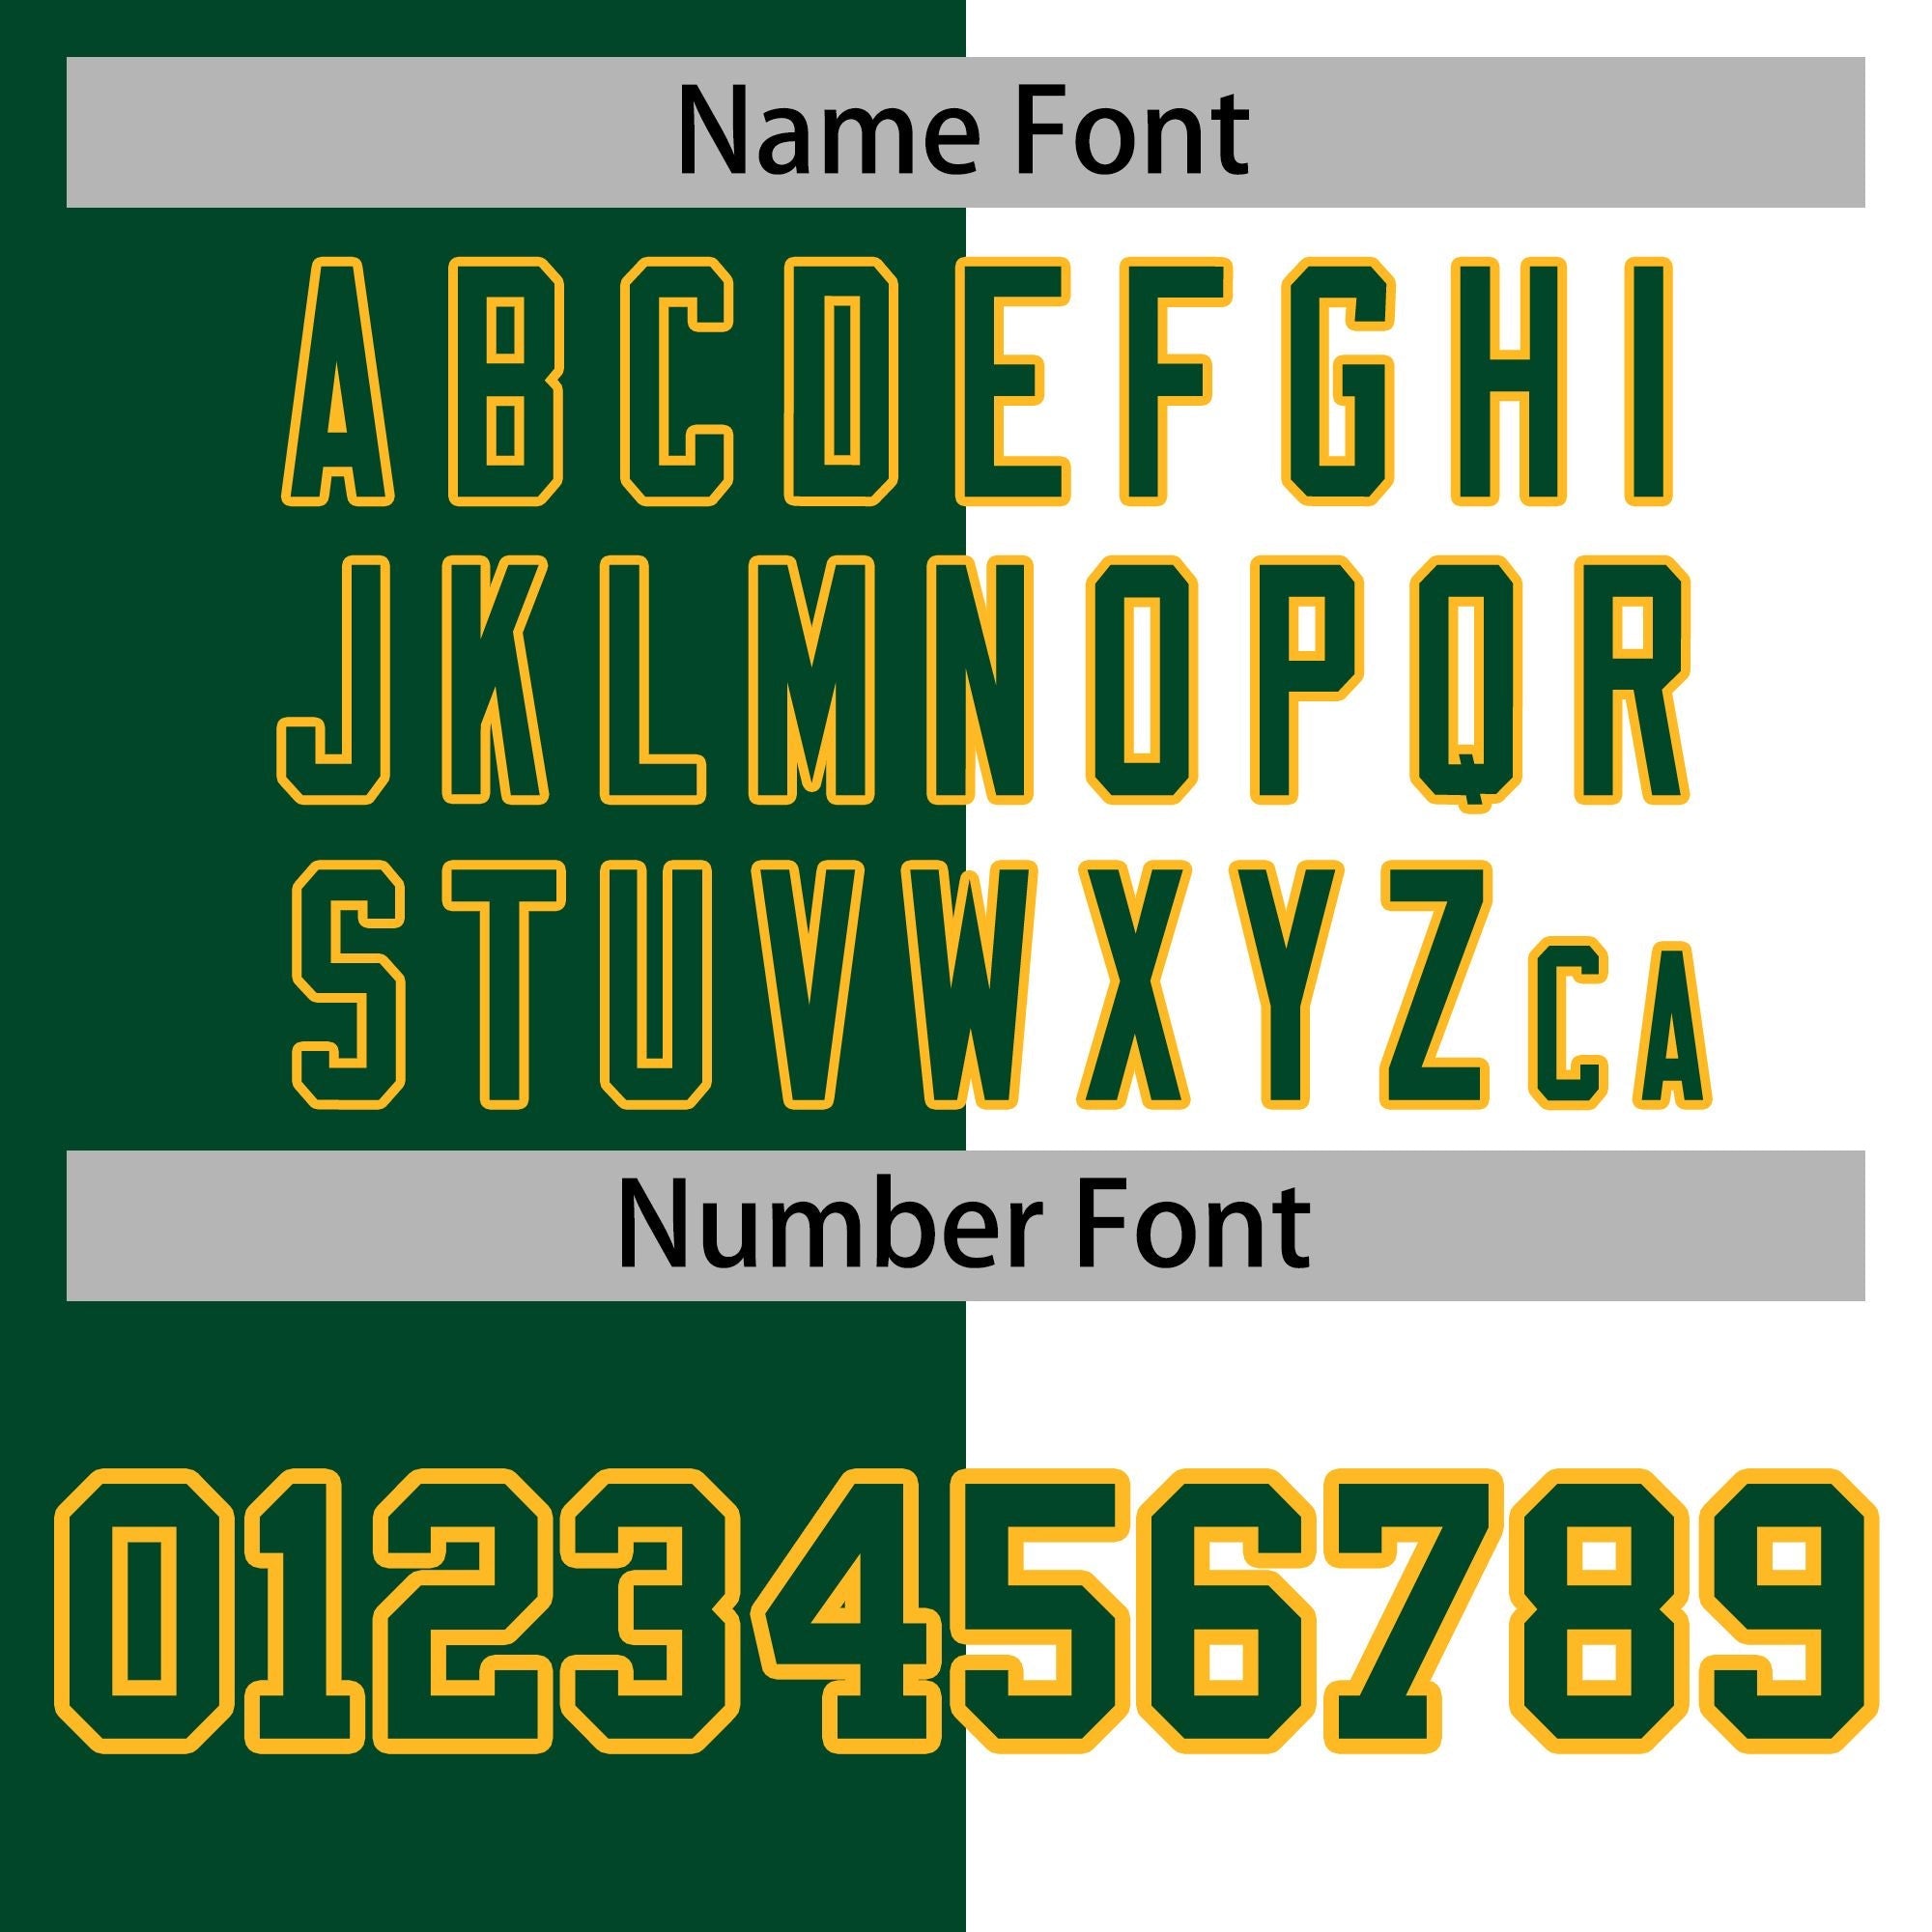 baseball uniform jacket name and number font style